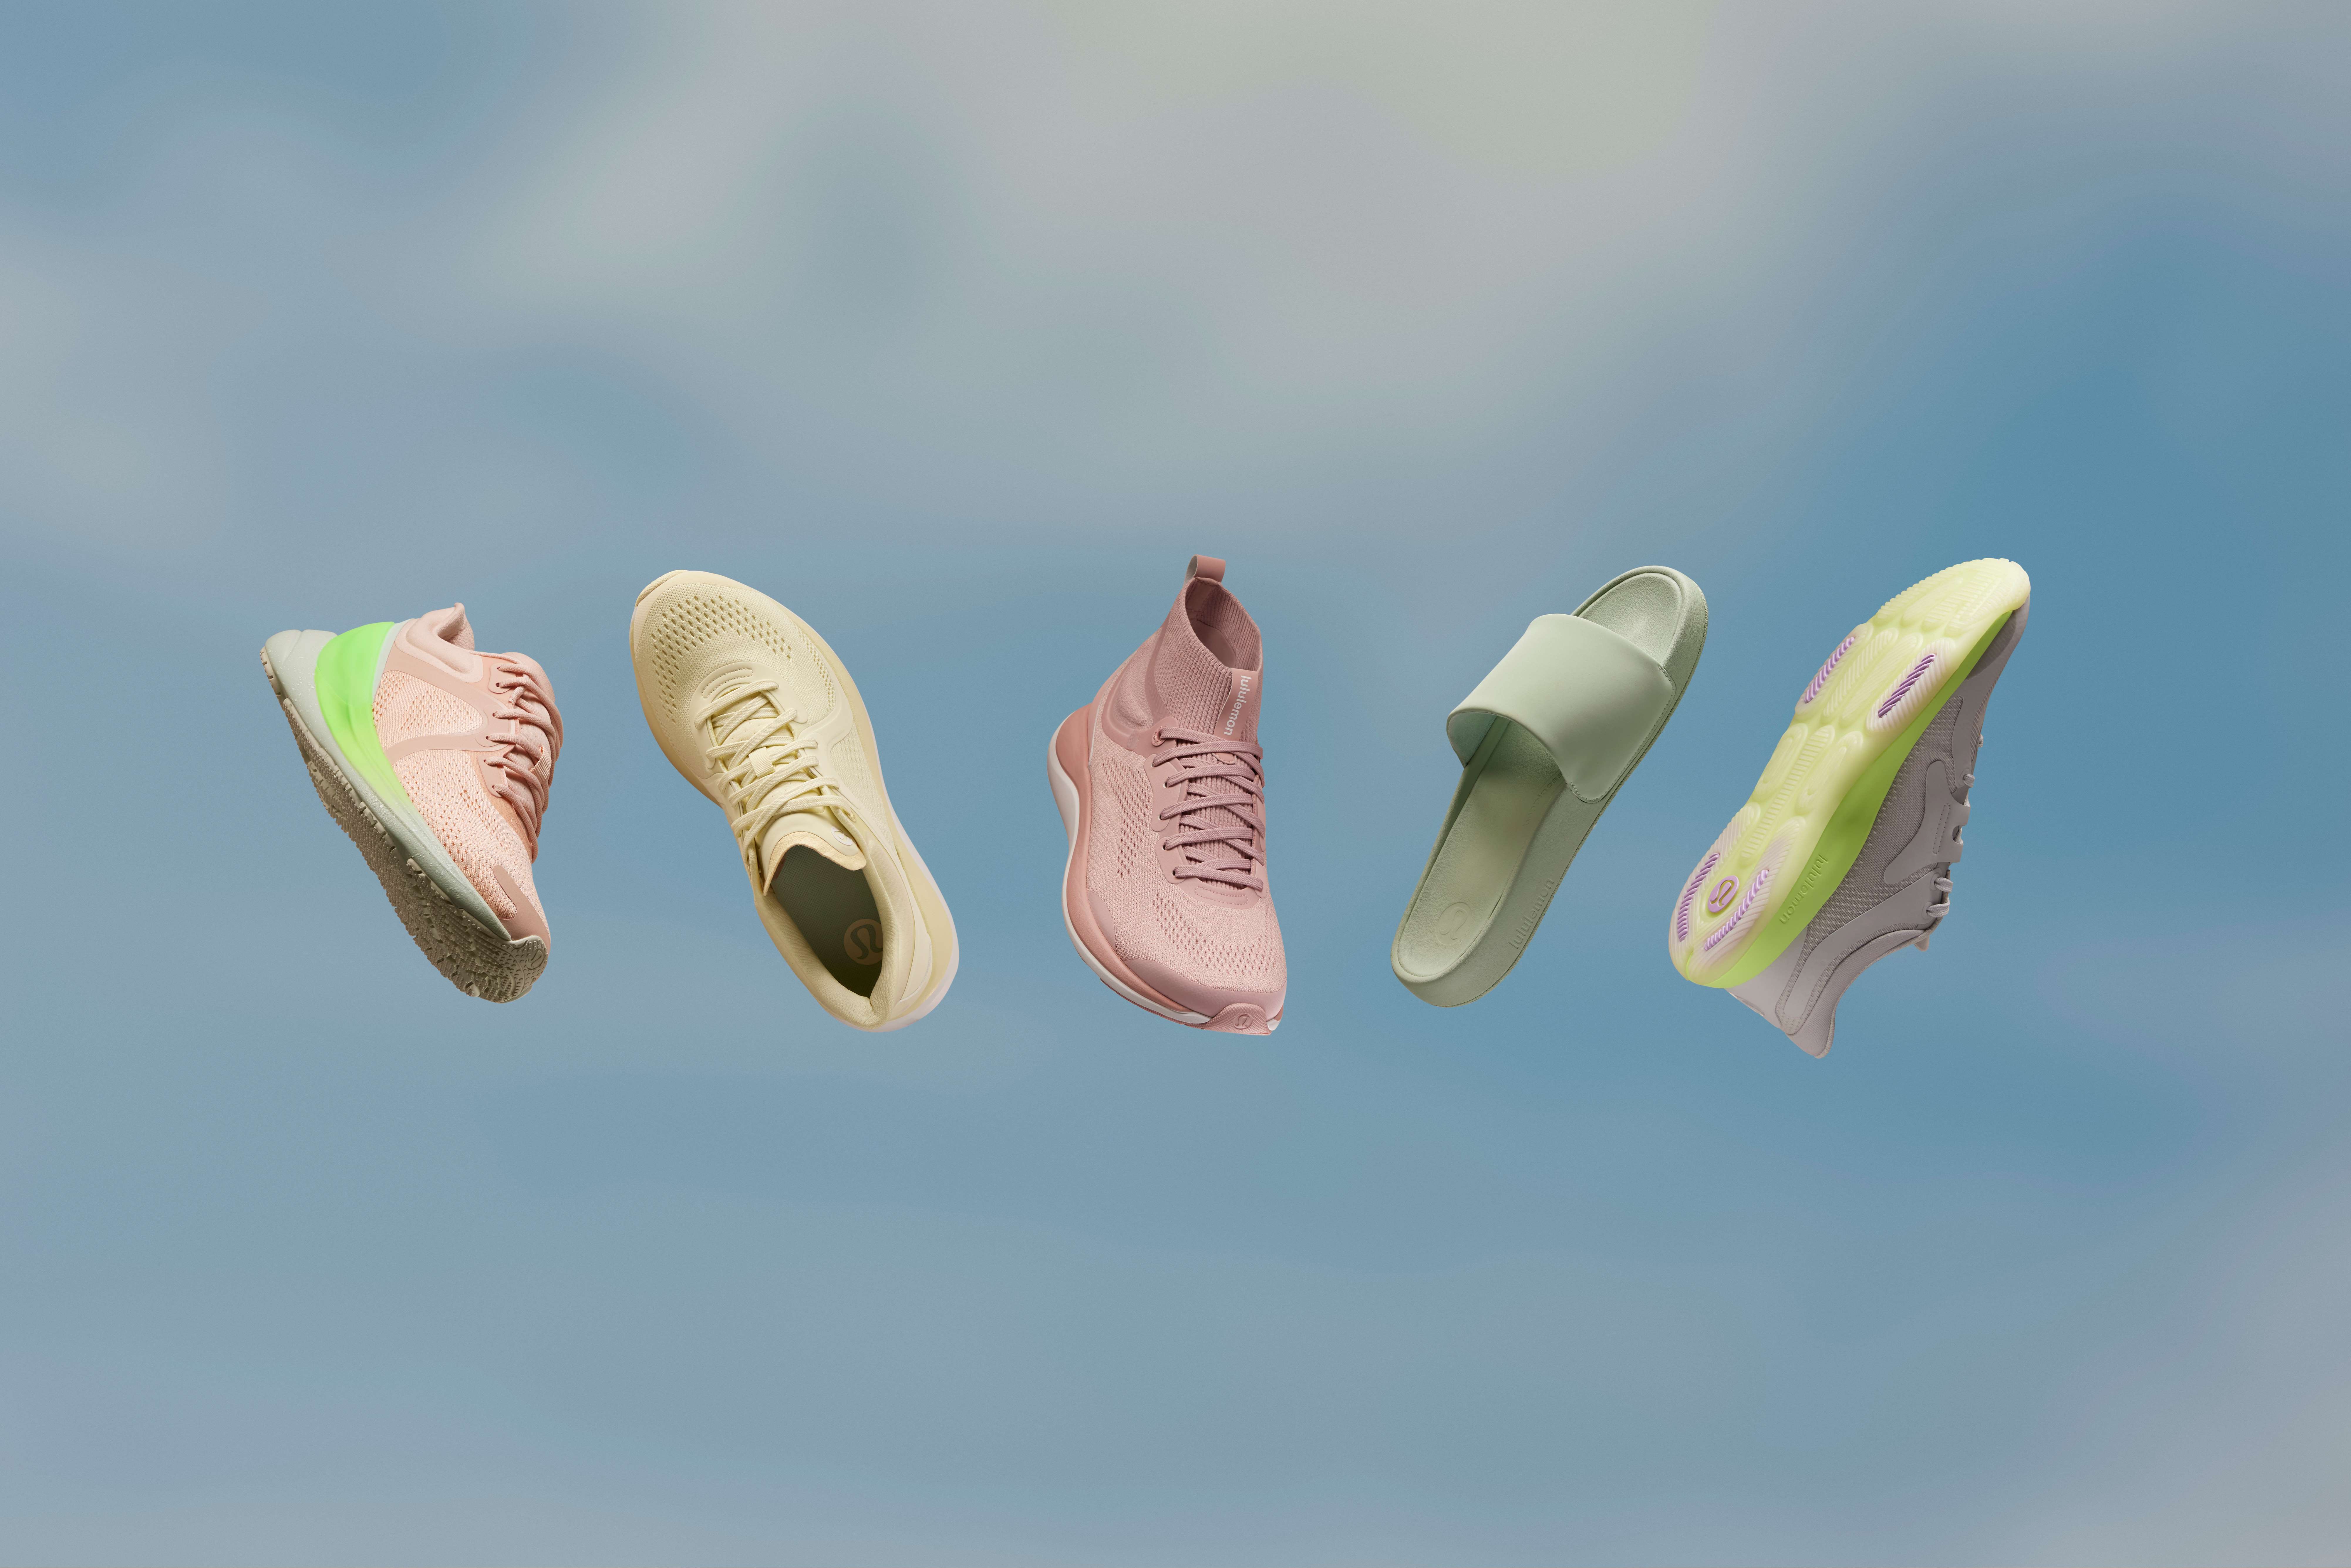 Lululemon launches into footwear as it seeks to take on industry giants like Nike, Adidas